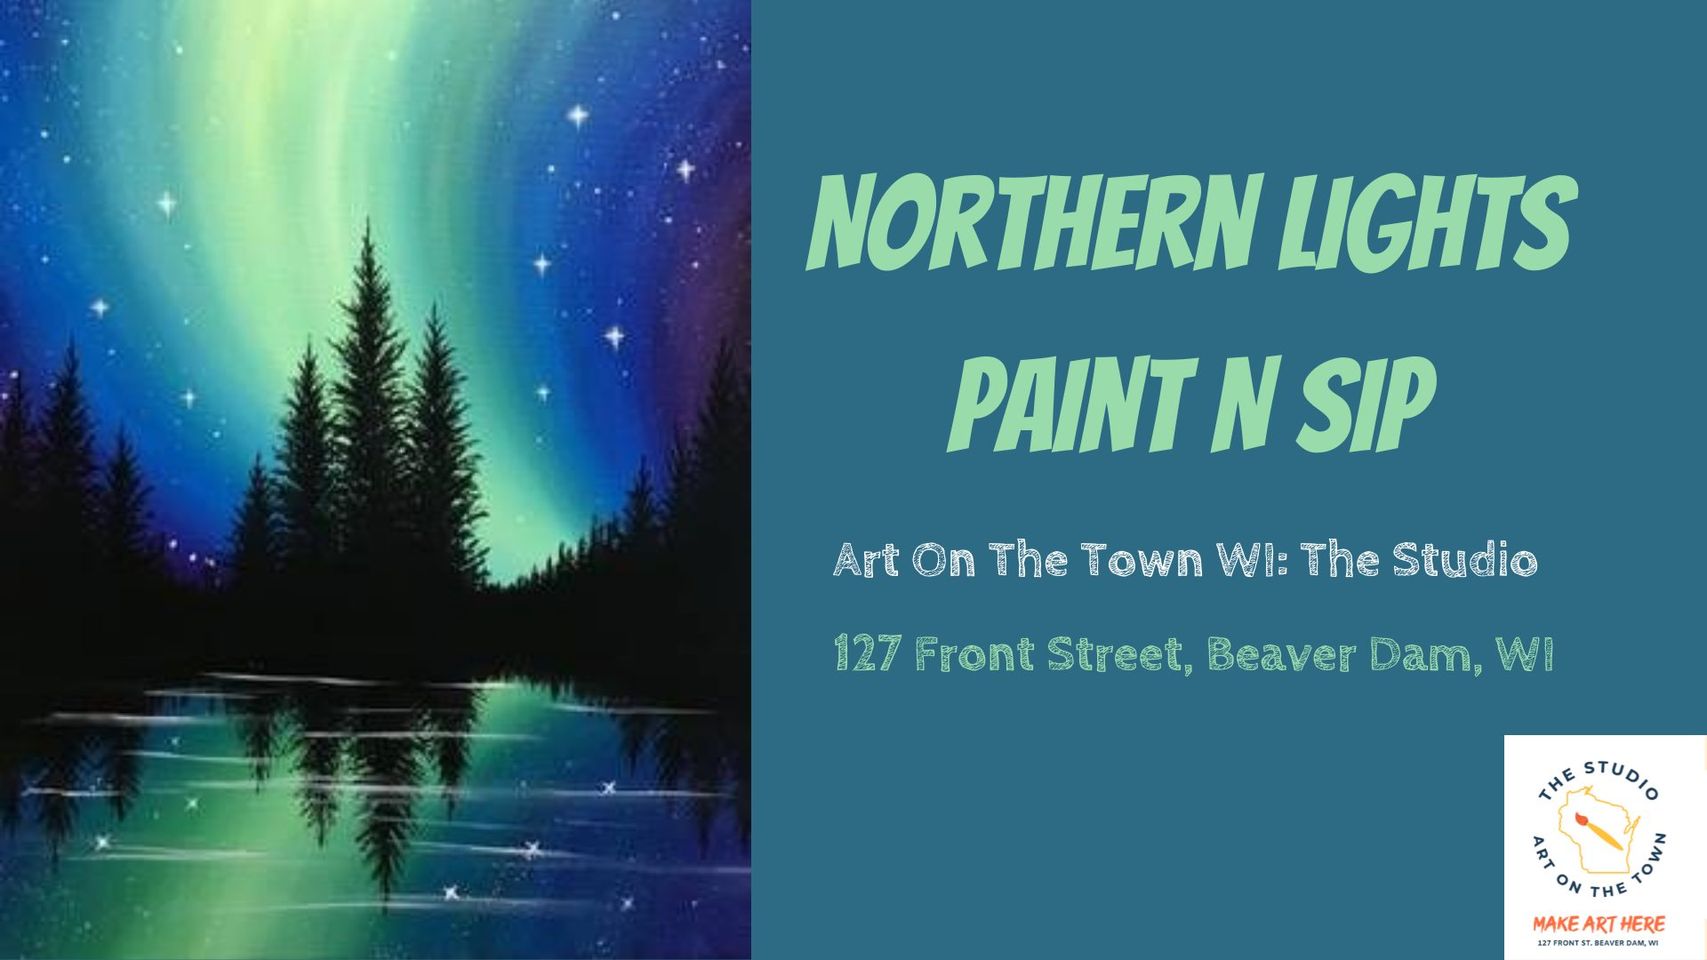 Northern Lights Paint N Sip